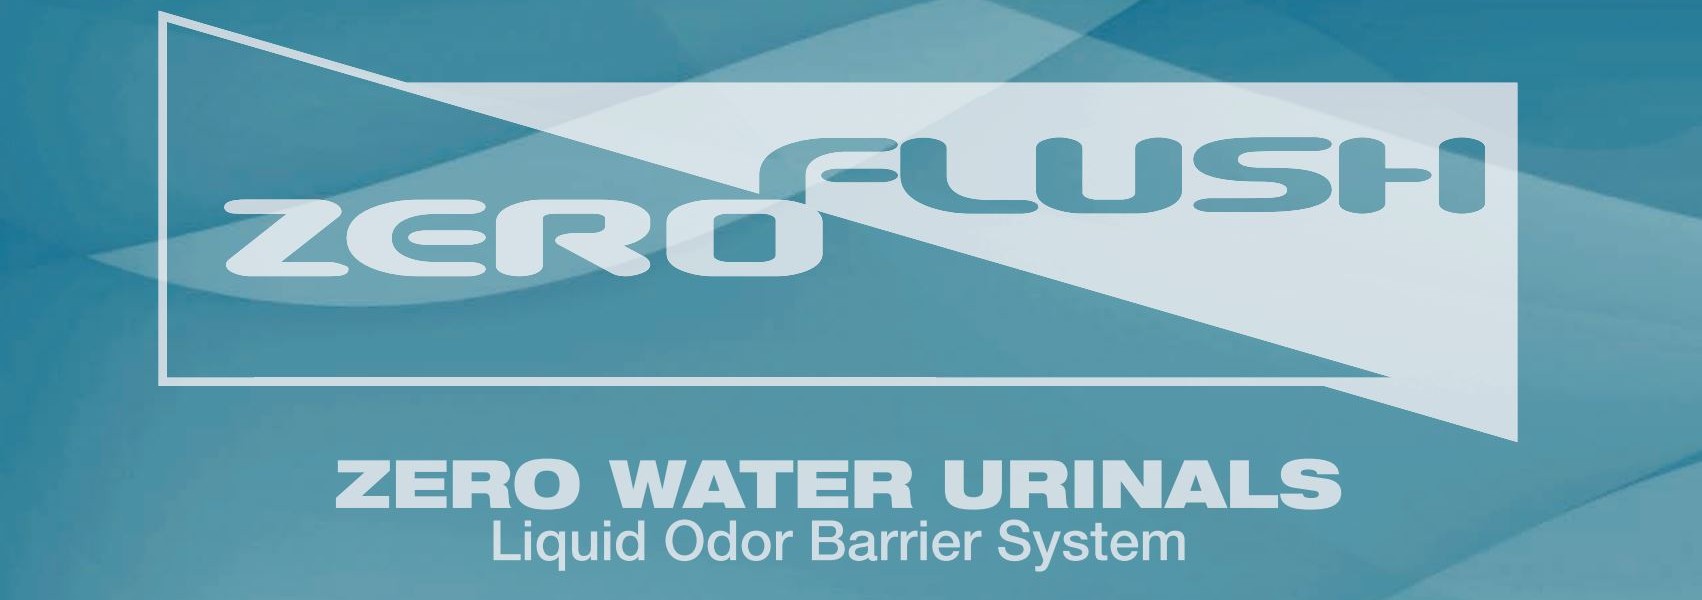 ZeroFlush Liquid Odor Barrier